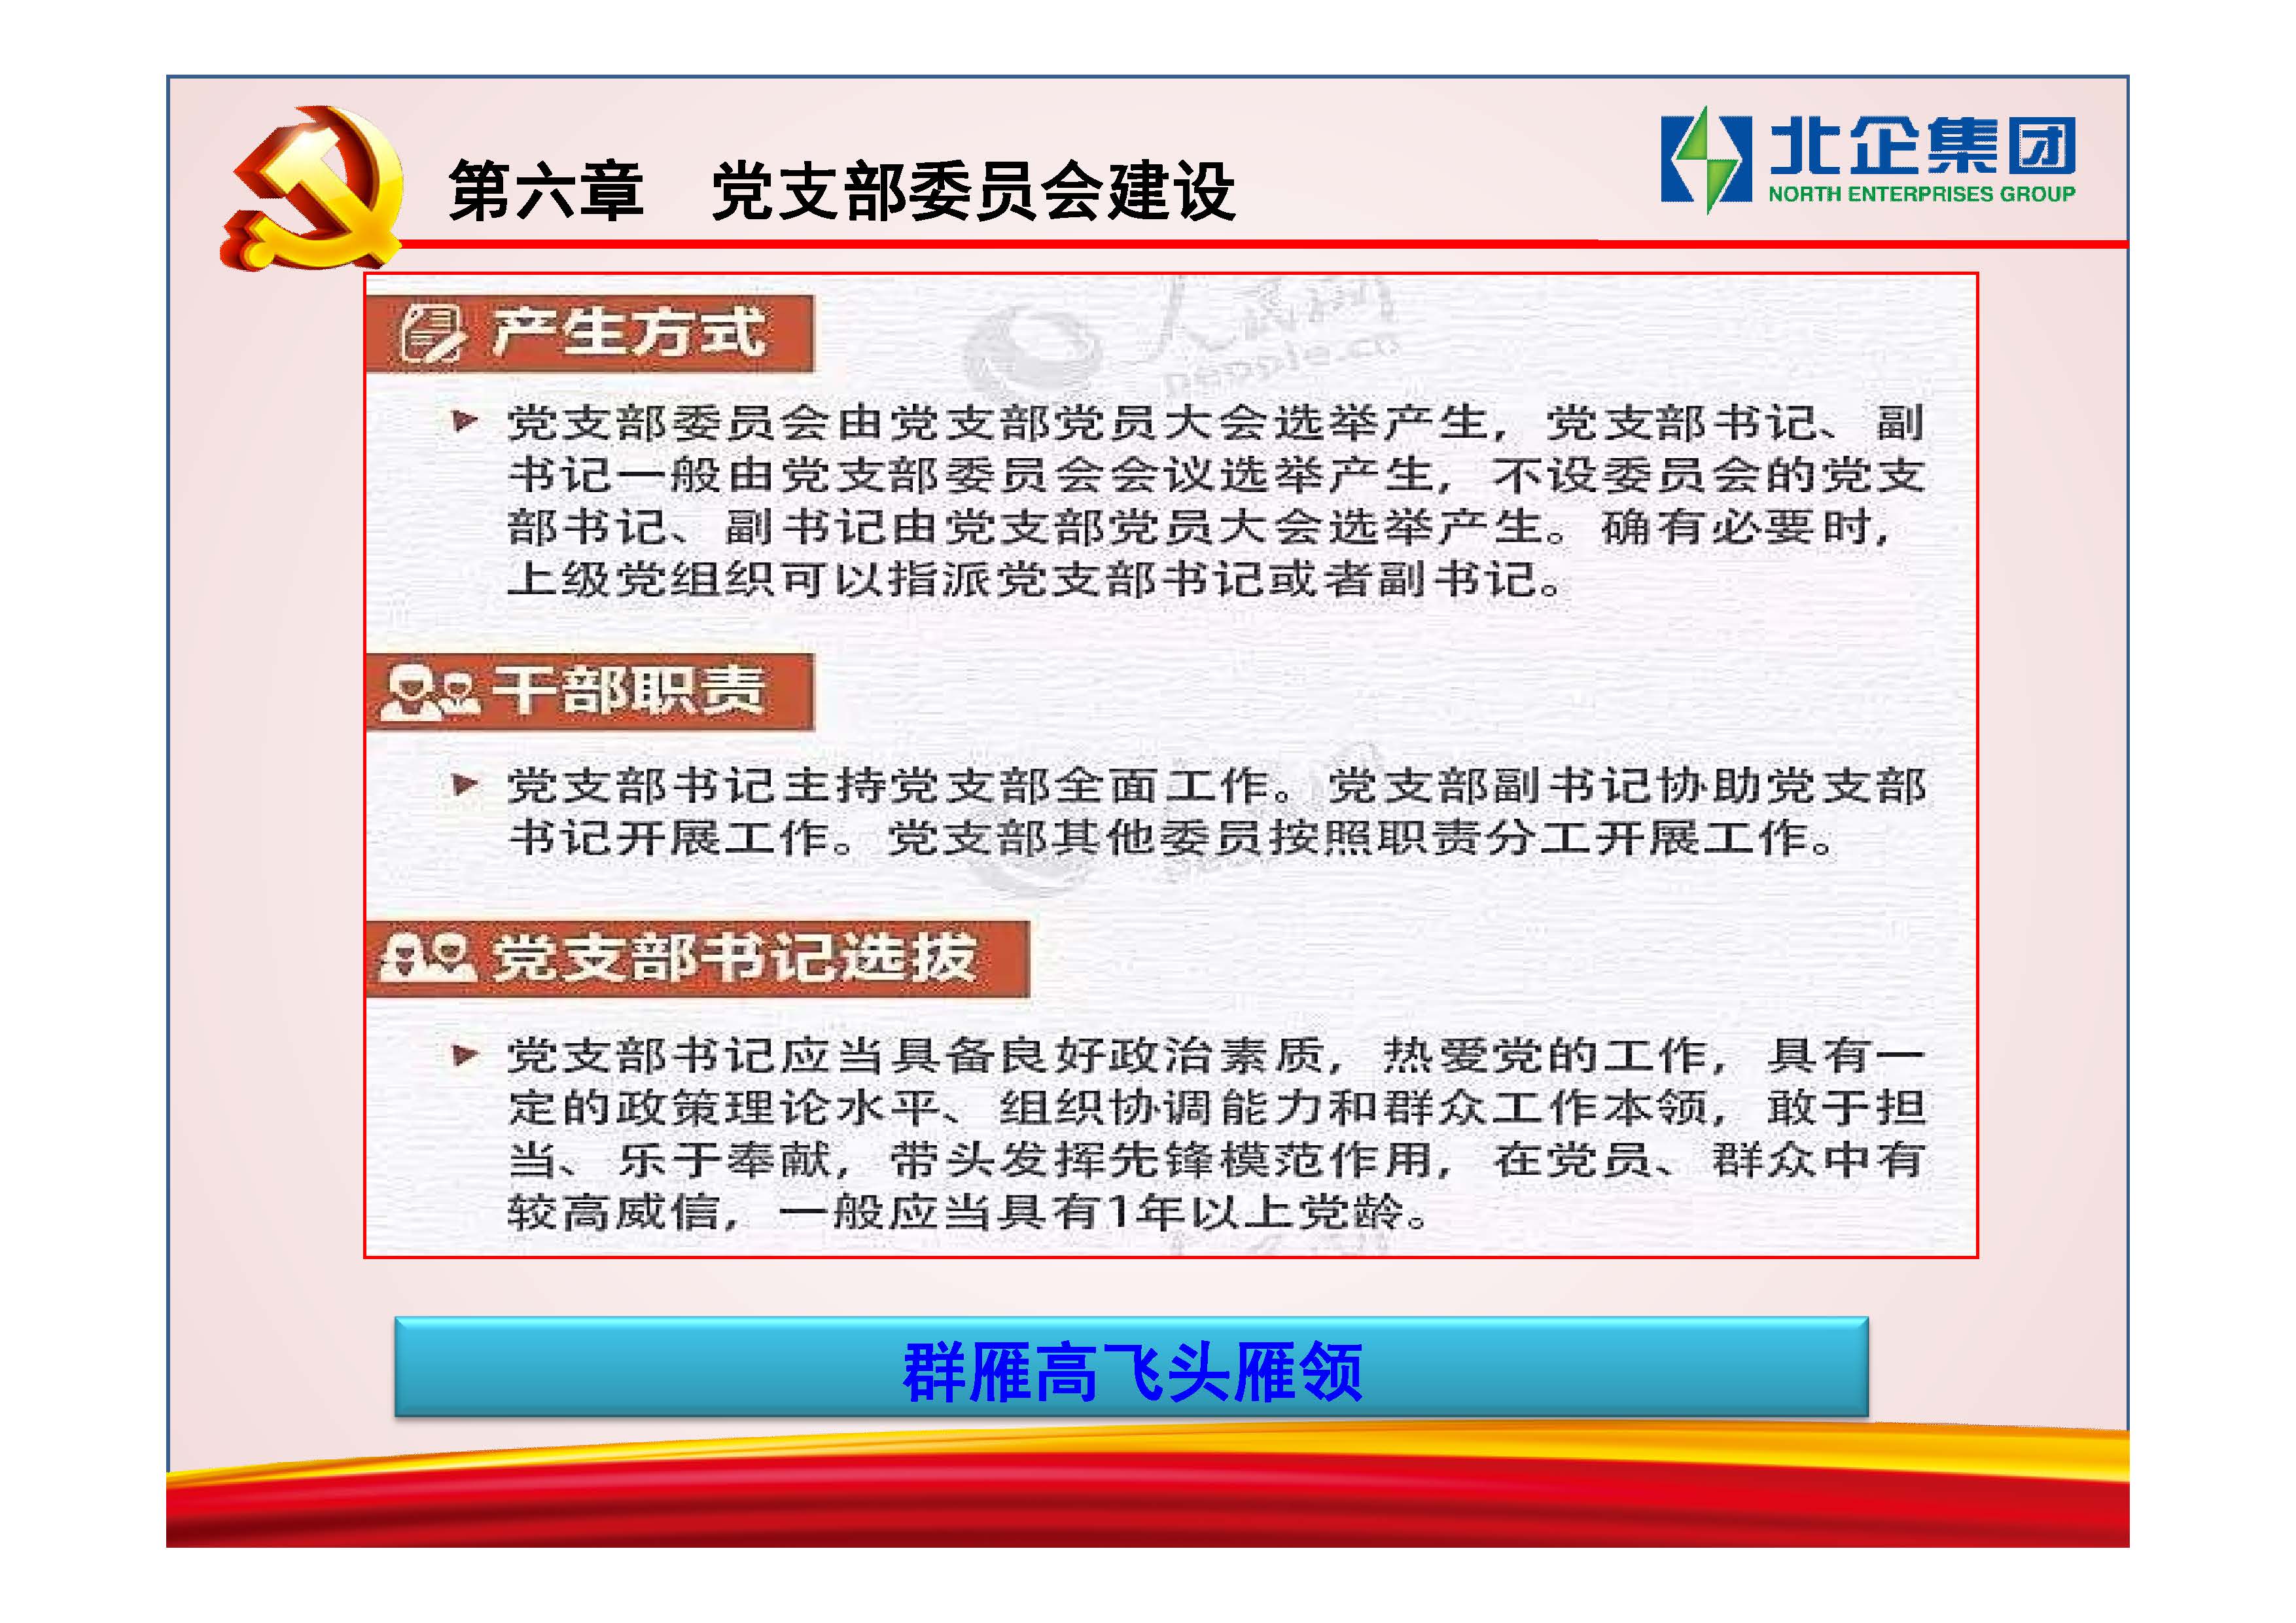 [PPT]中国兵器装备集团洛阳北方企业集团有限公司《建强“小”支部 发挥“大”作用》